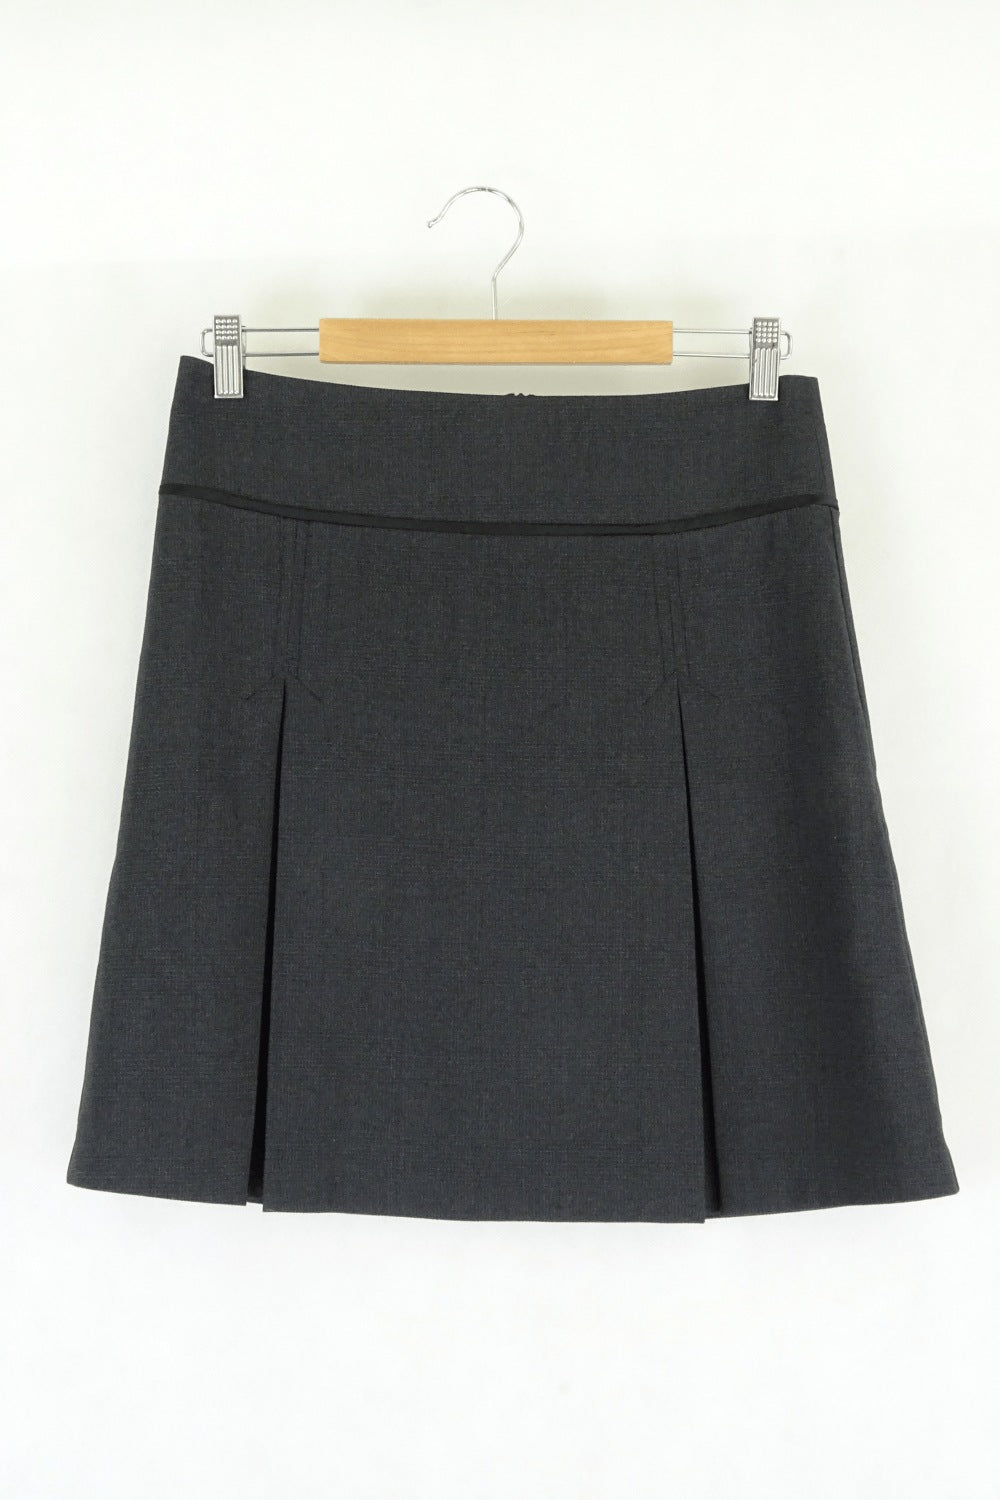 Portmans Grey Skirt 8